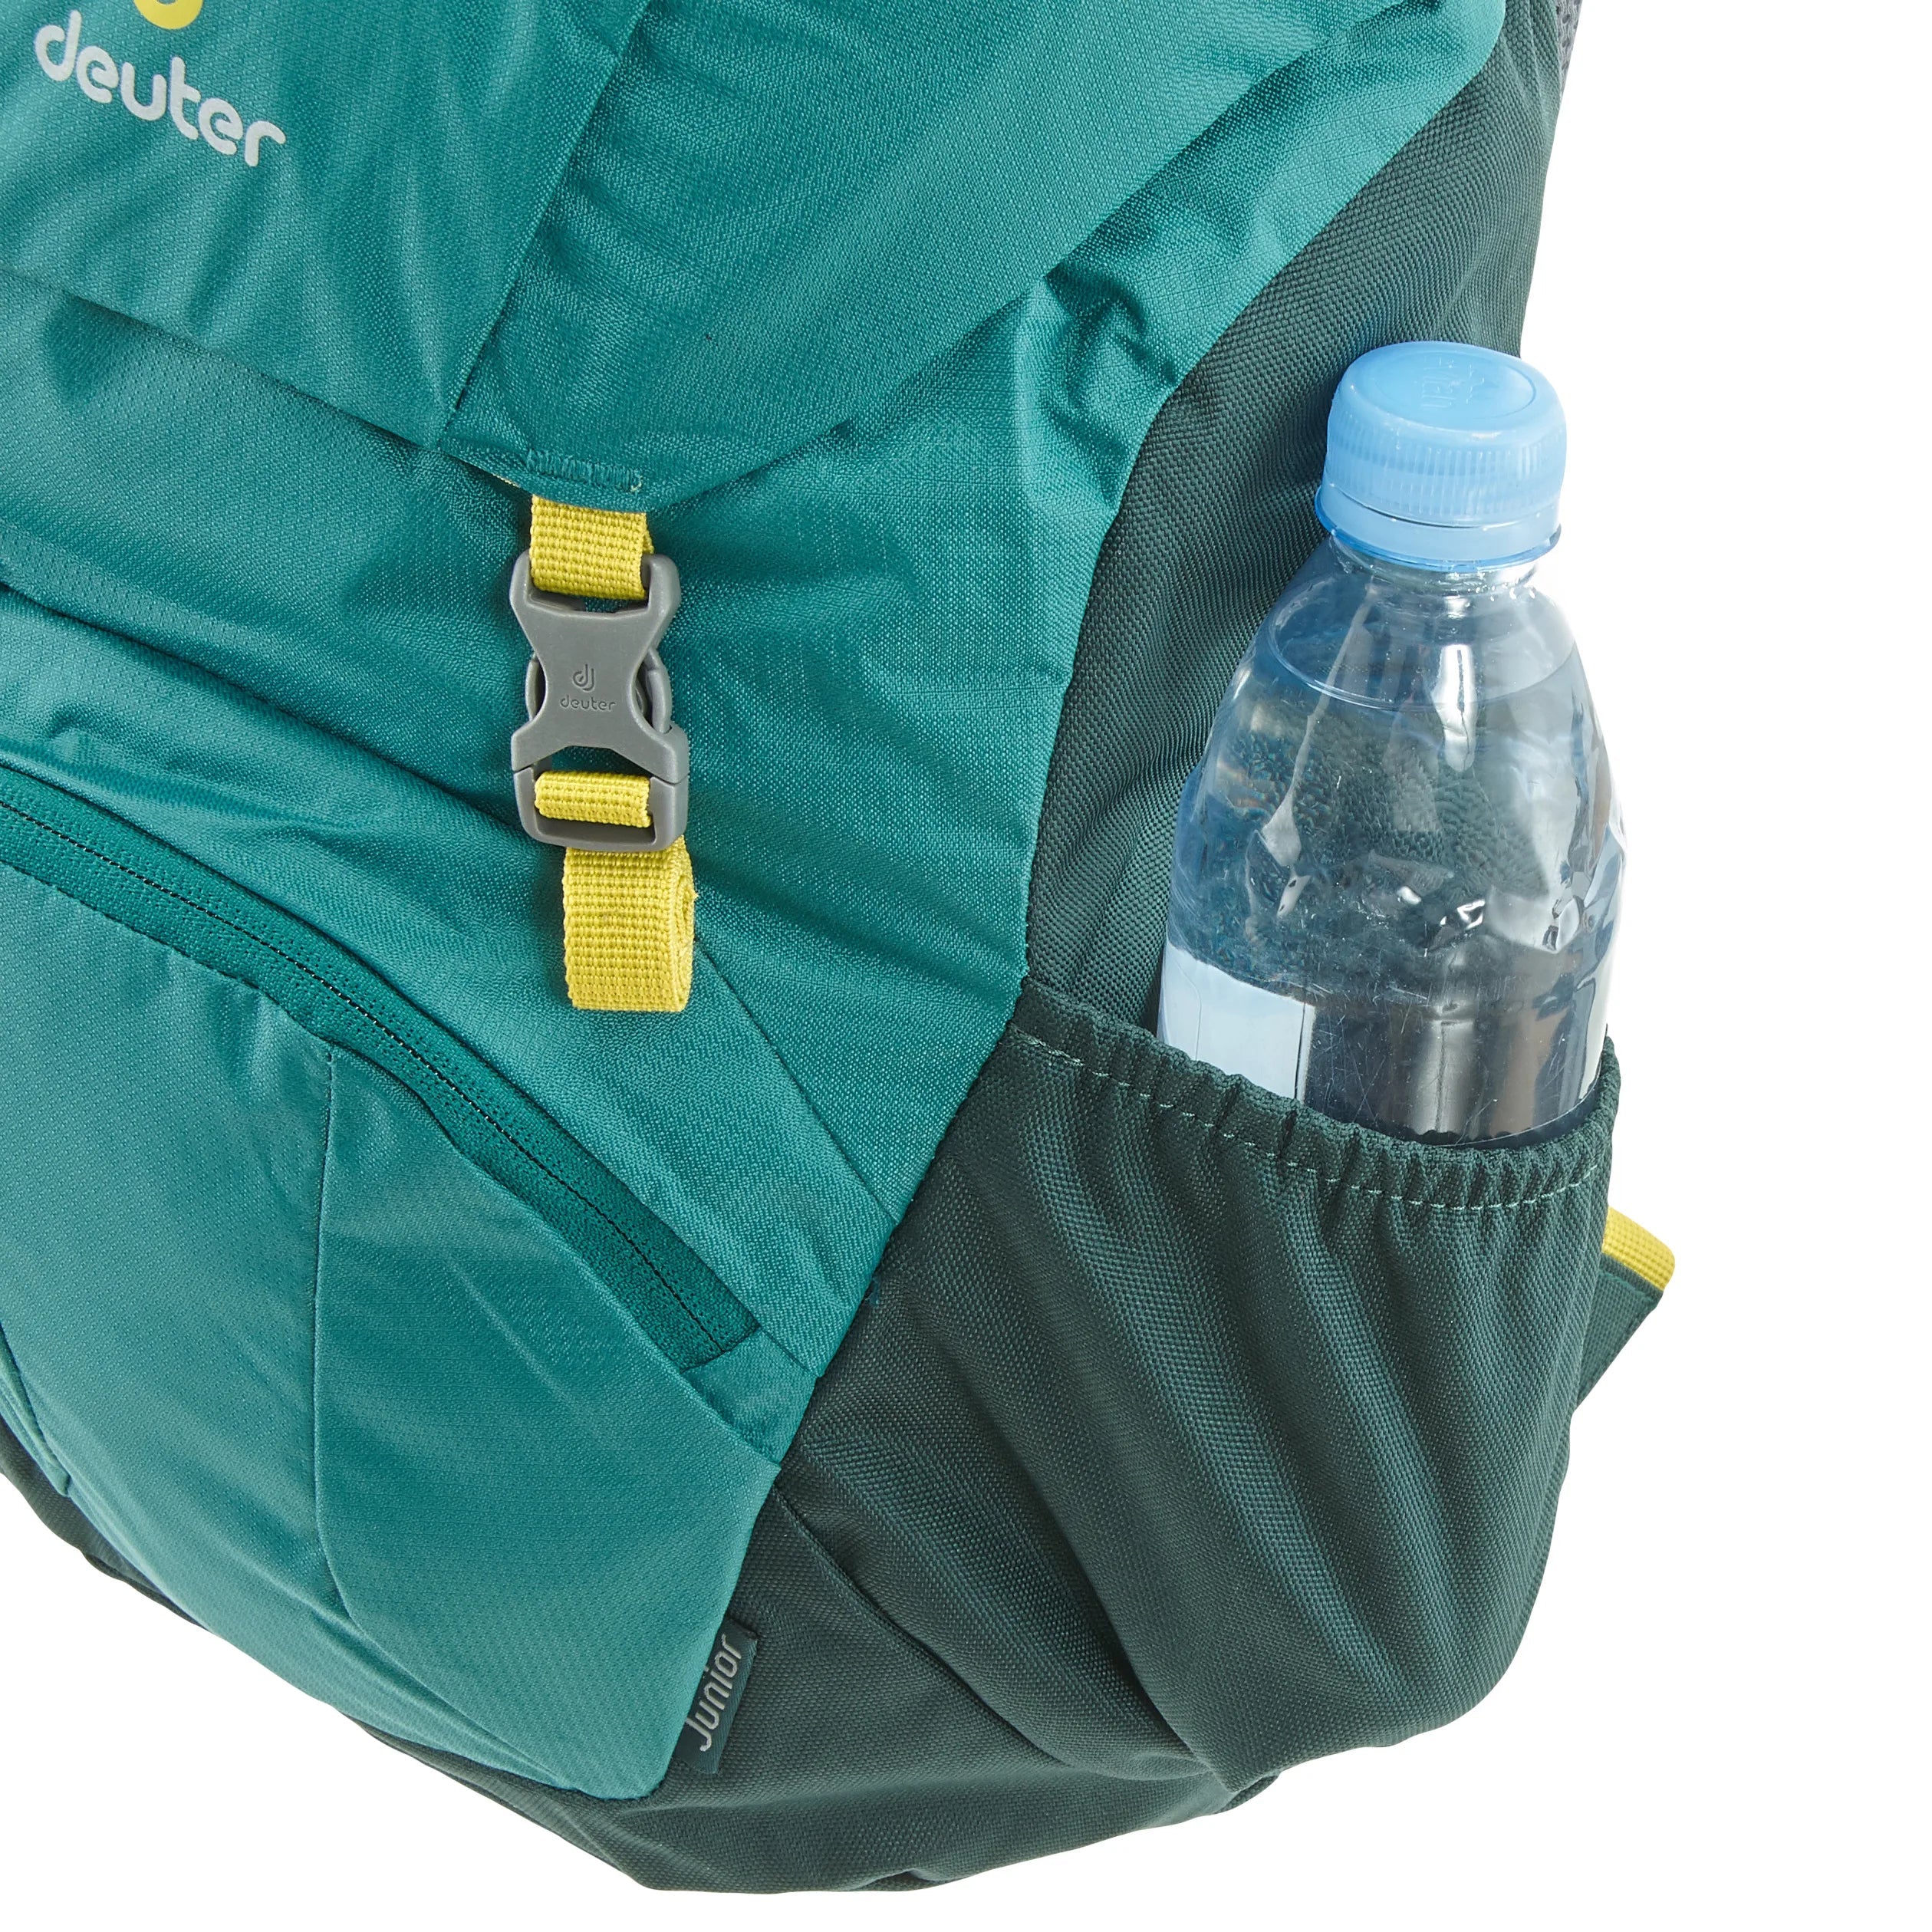 Deuter Daypack Junior children's backpack 43 cm - Maron-Currant